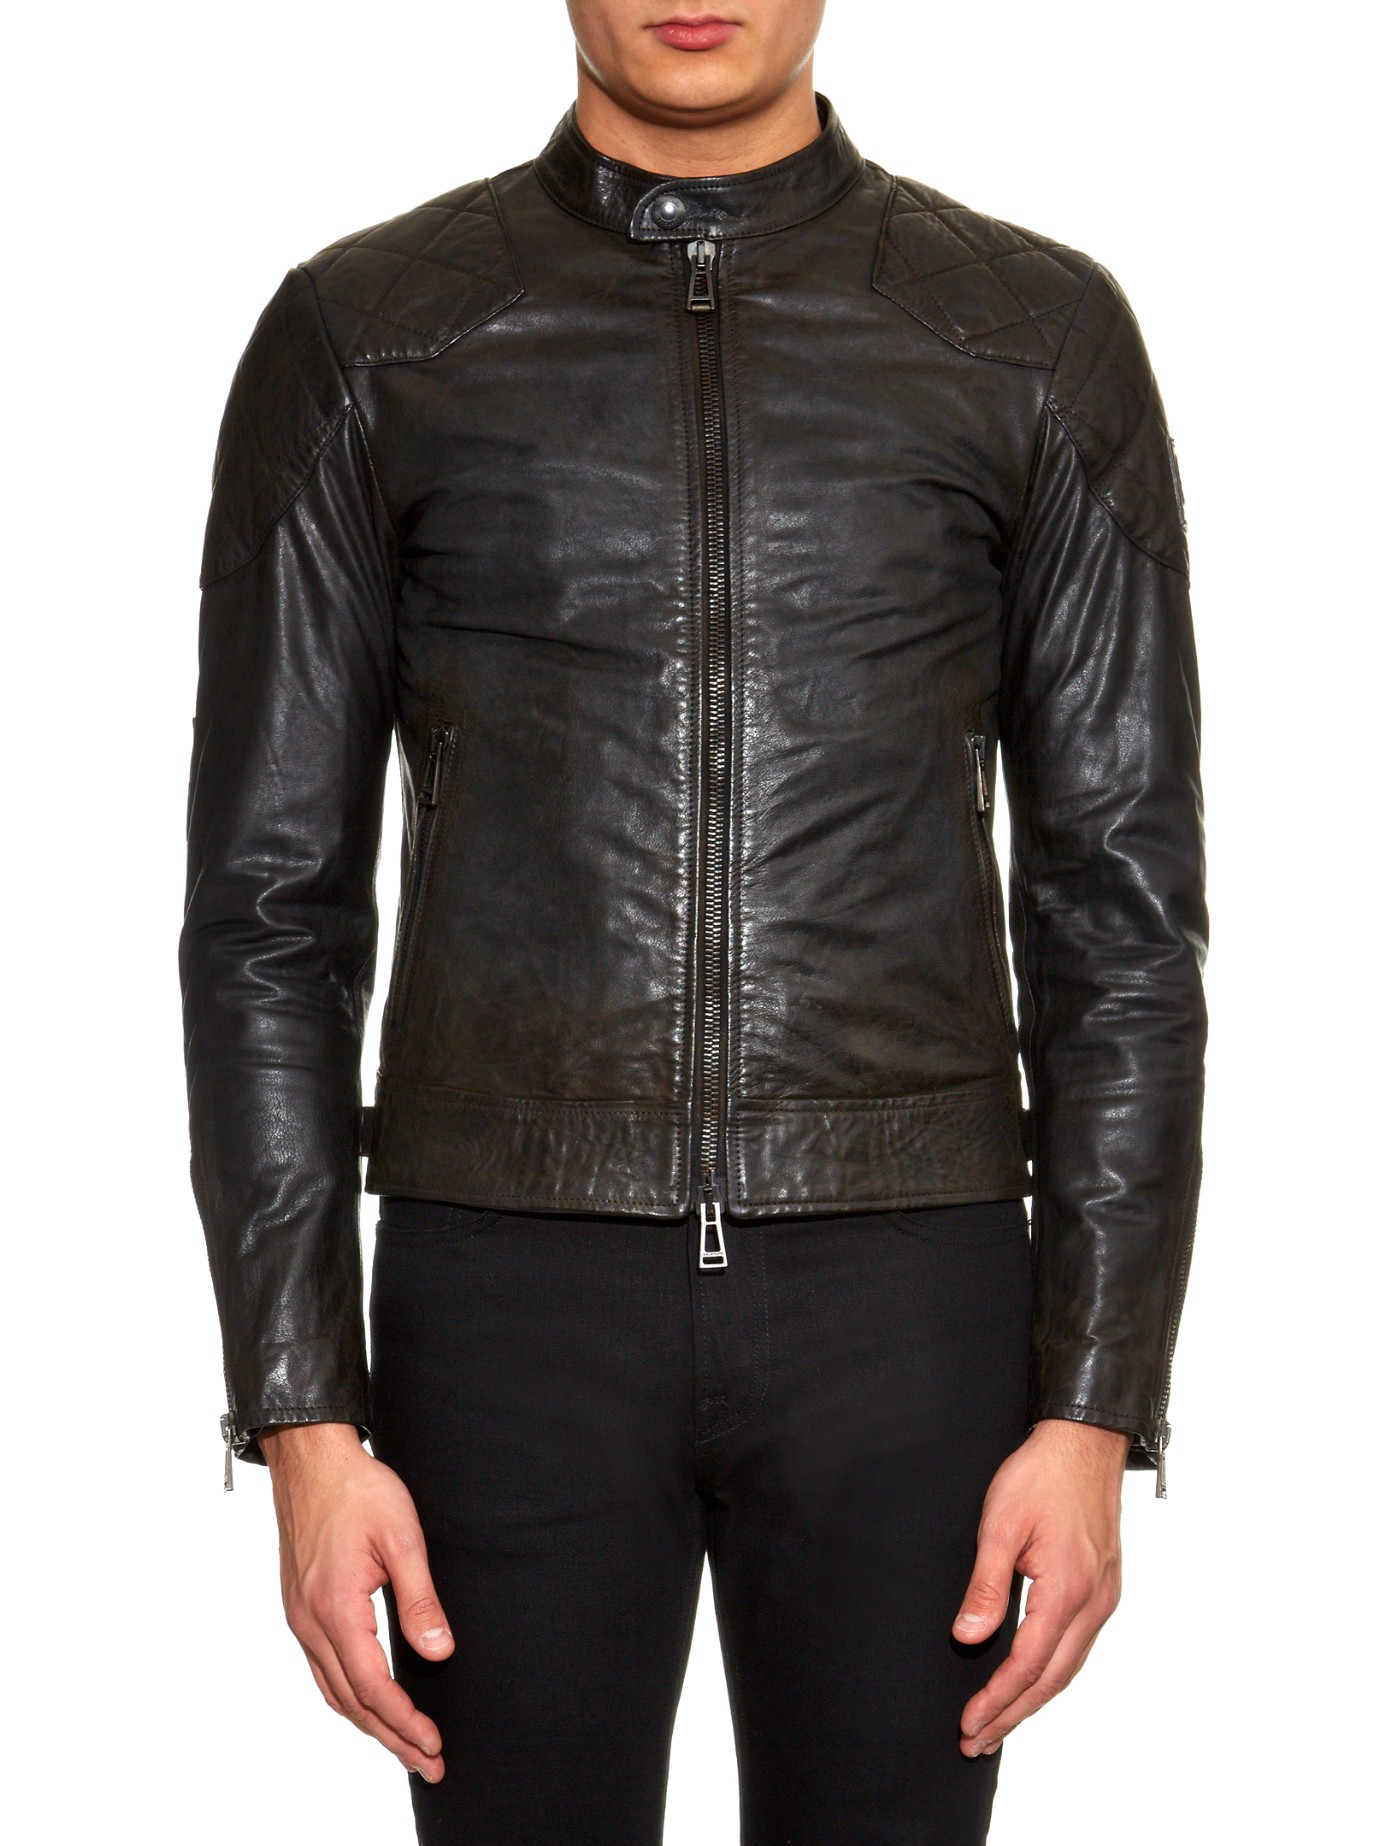 Belstaff Outlaw Leather Jacket in Black for Men - Lyst